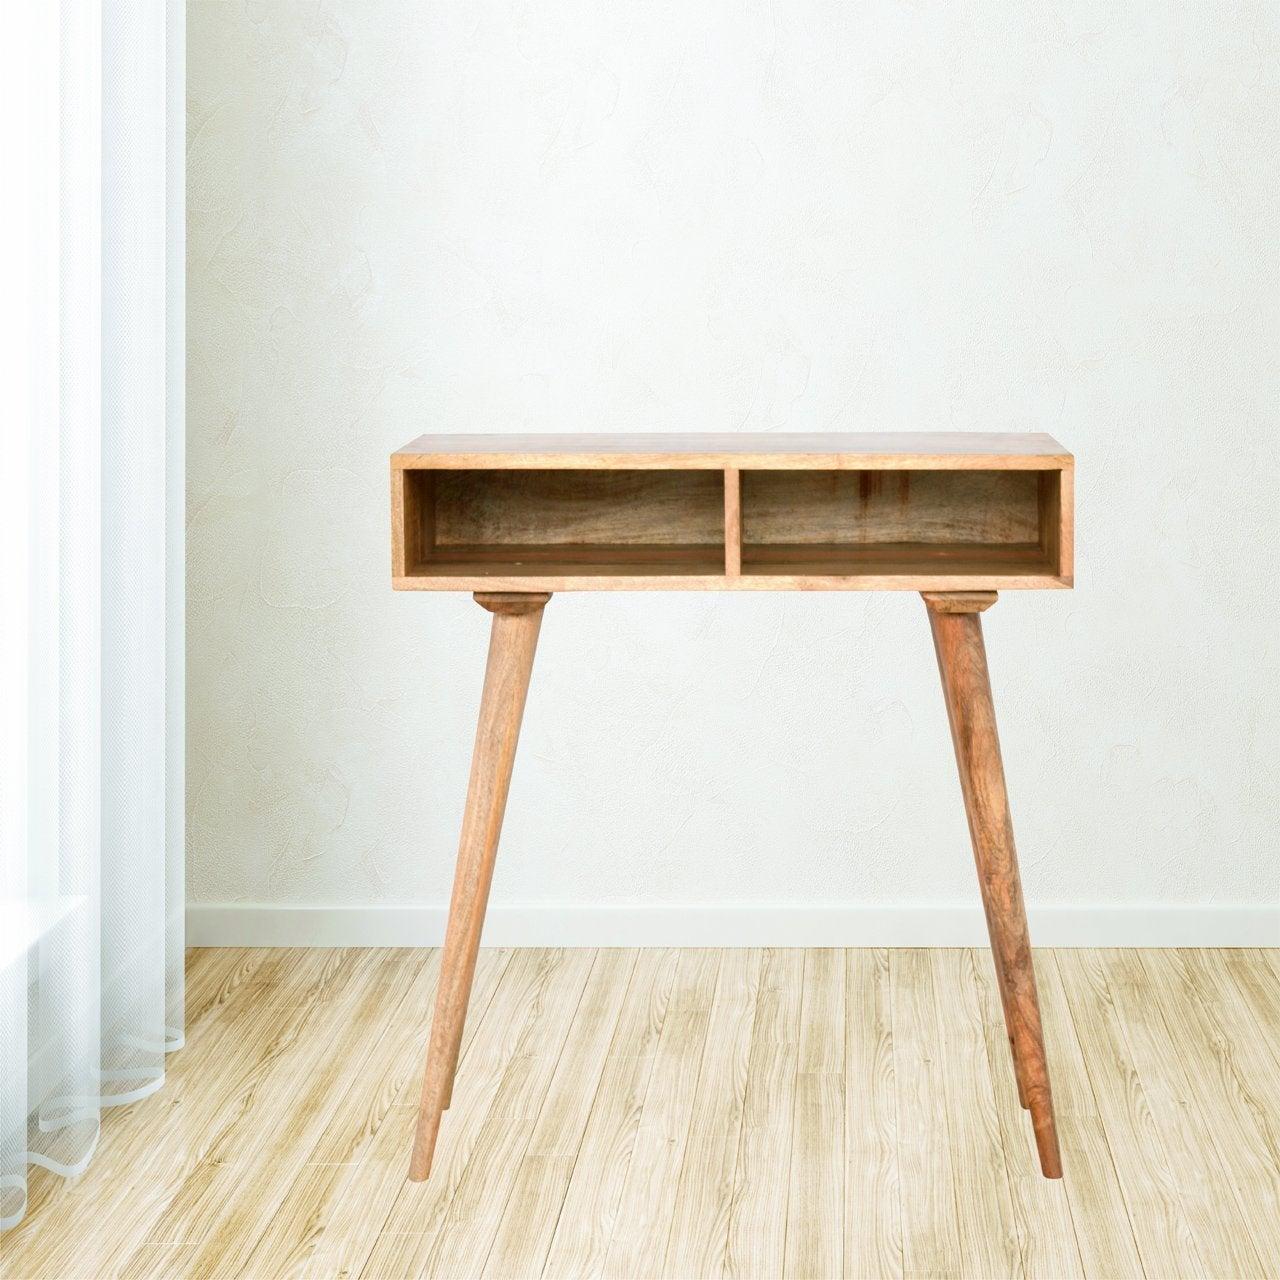 Nordic style open shelf writing desk - crimblefest furniture - image 2